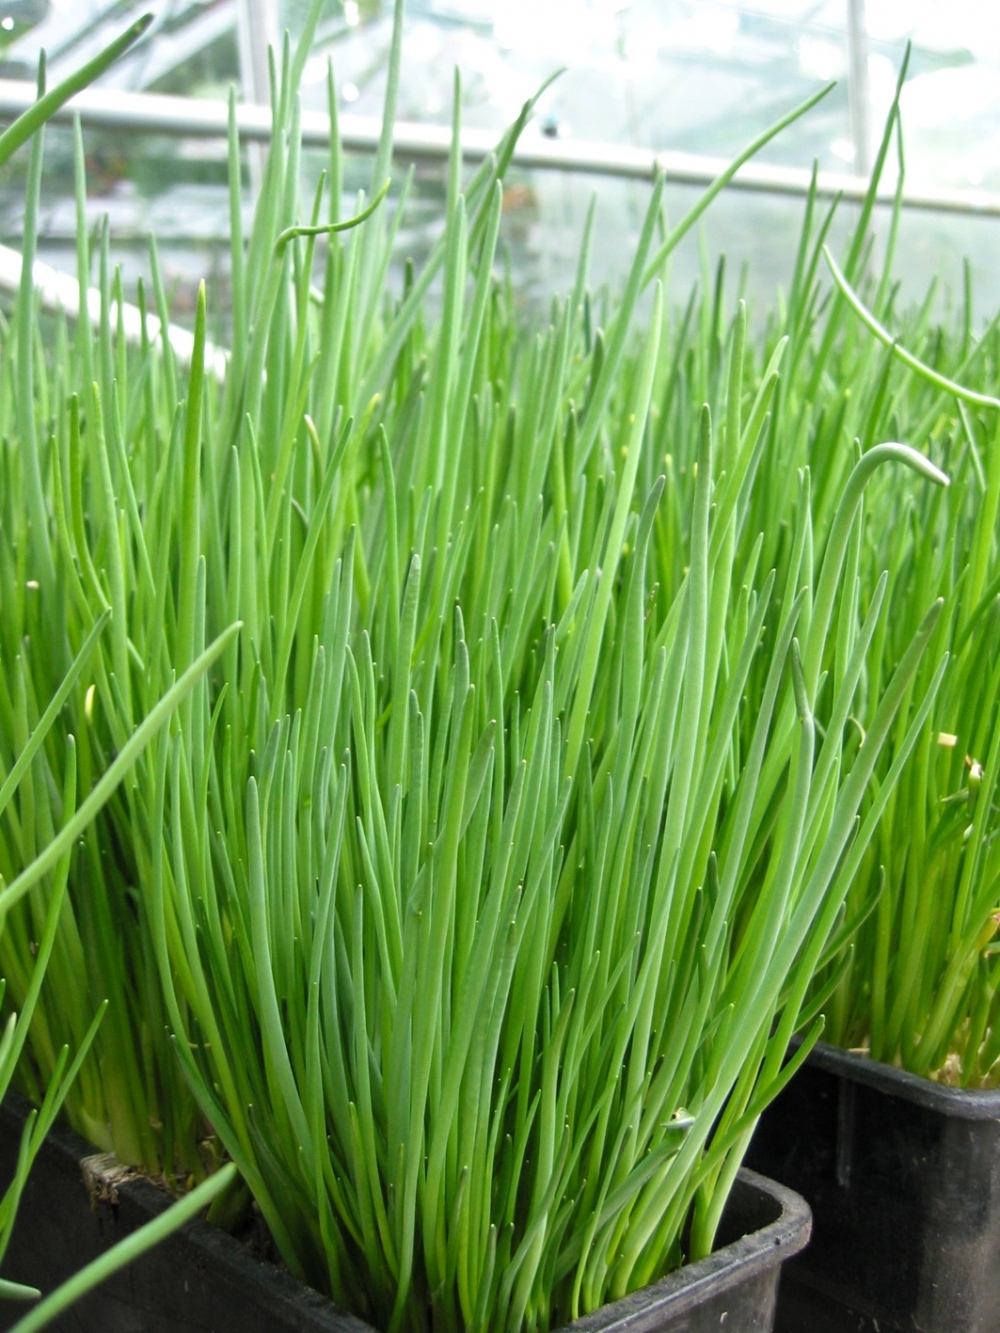 Allium schoenoprasum. Frodig, mørkegrønn mellomstorbladet gressløk. Gir høy avling. Forkultivering anbefales. Til både frilands- og drivhuskultur.